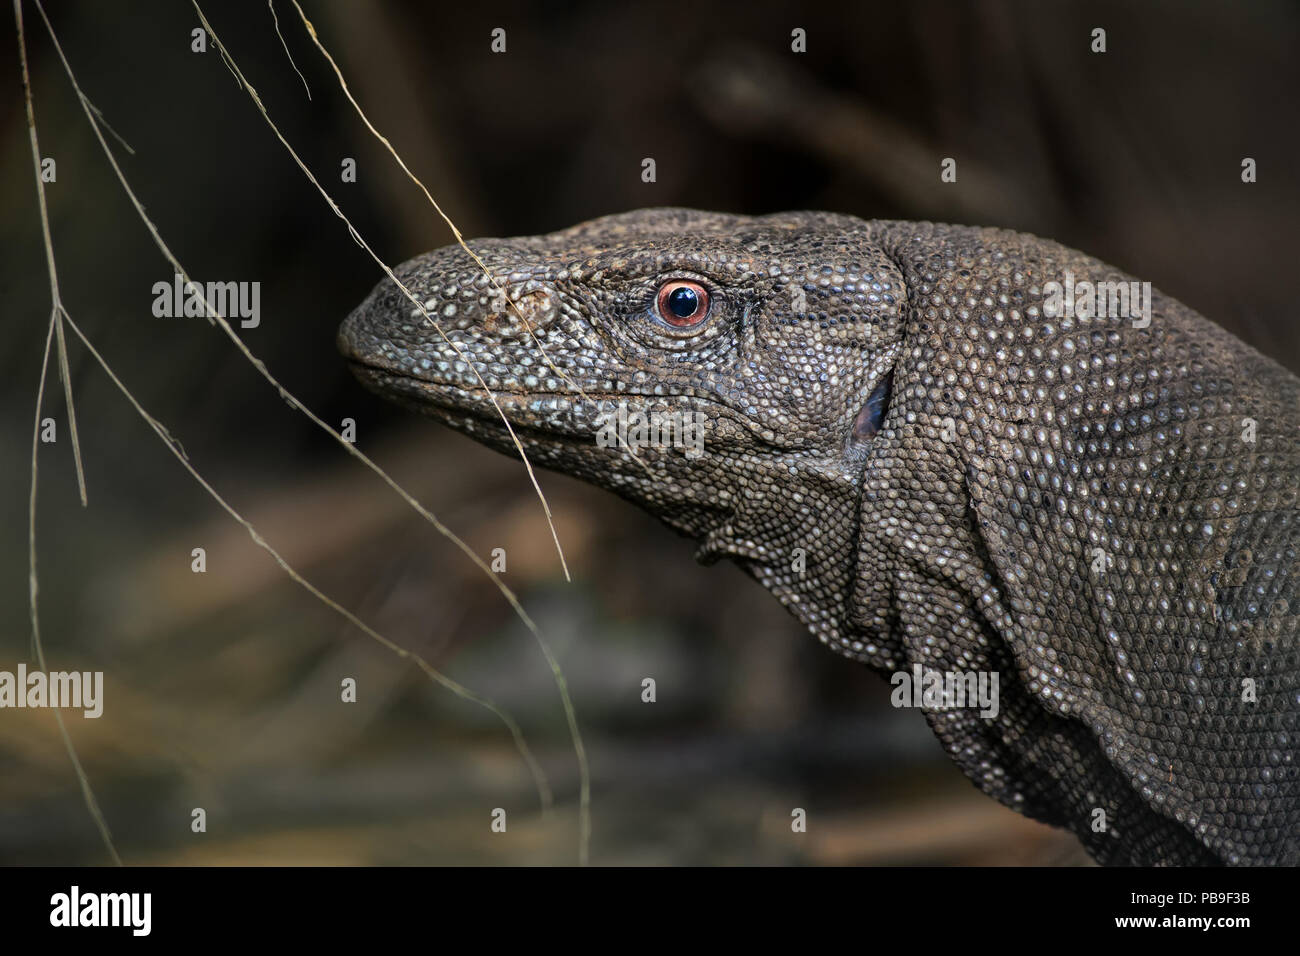 Monitor del Bengala - Varanus bengalensis, grande lizard da Sri Lanka le foreste. Foto Stock